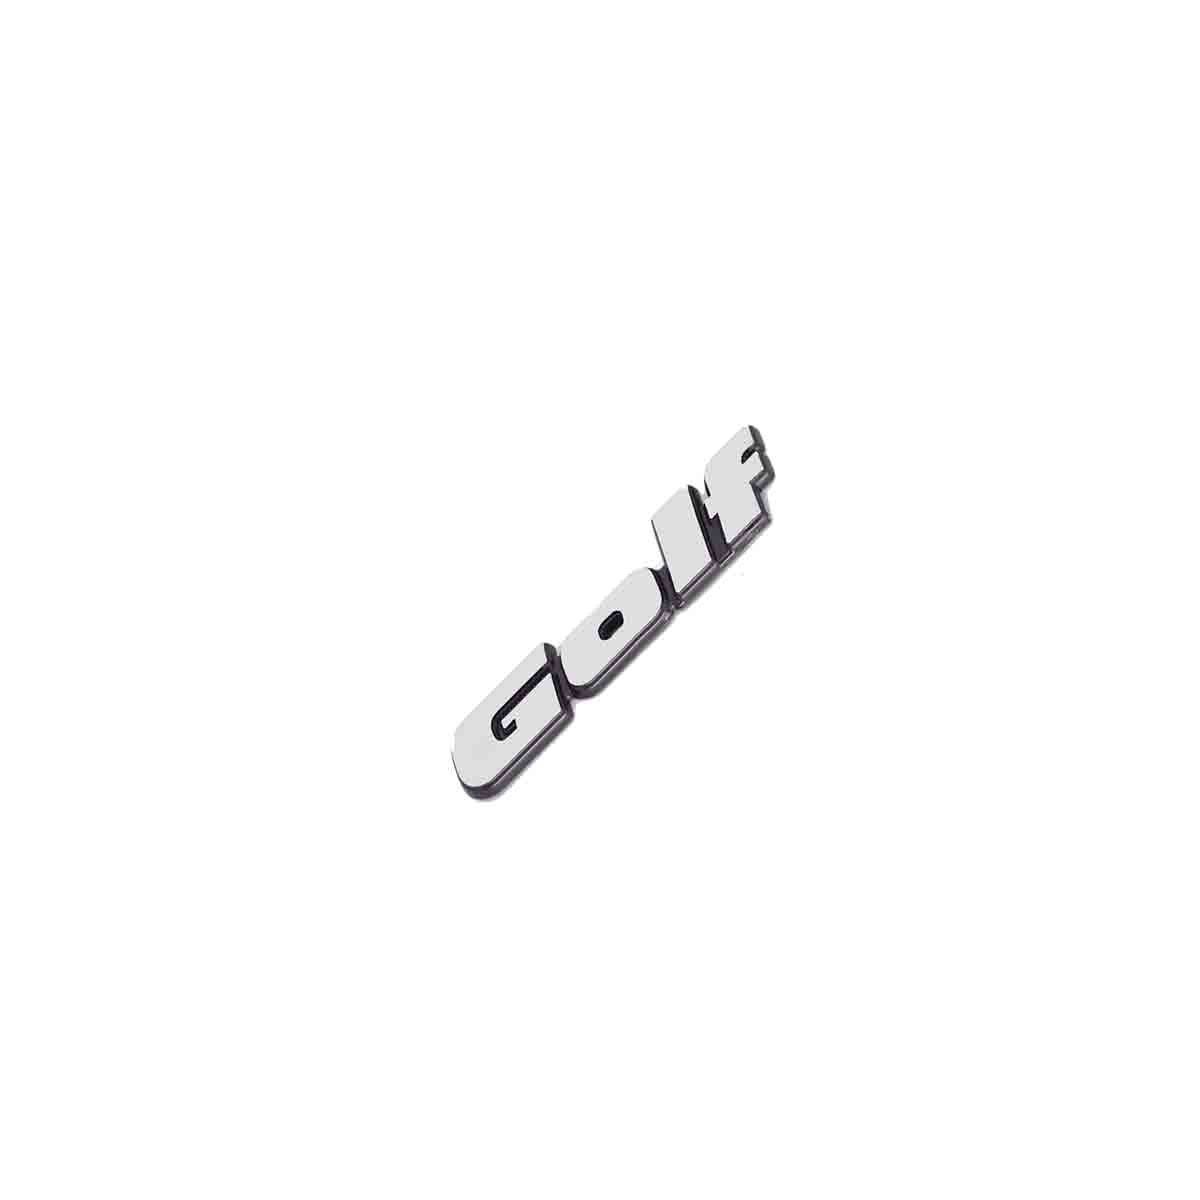 Emblema Golf 97/99 Escovado